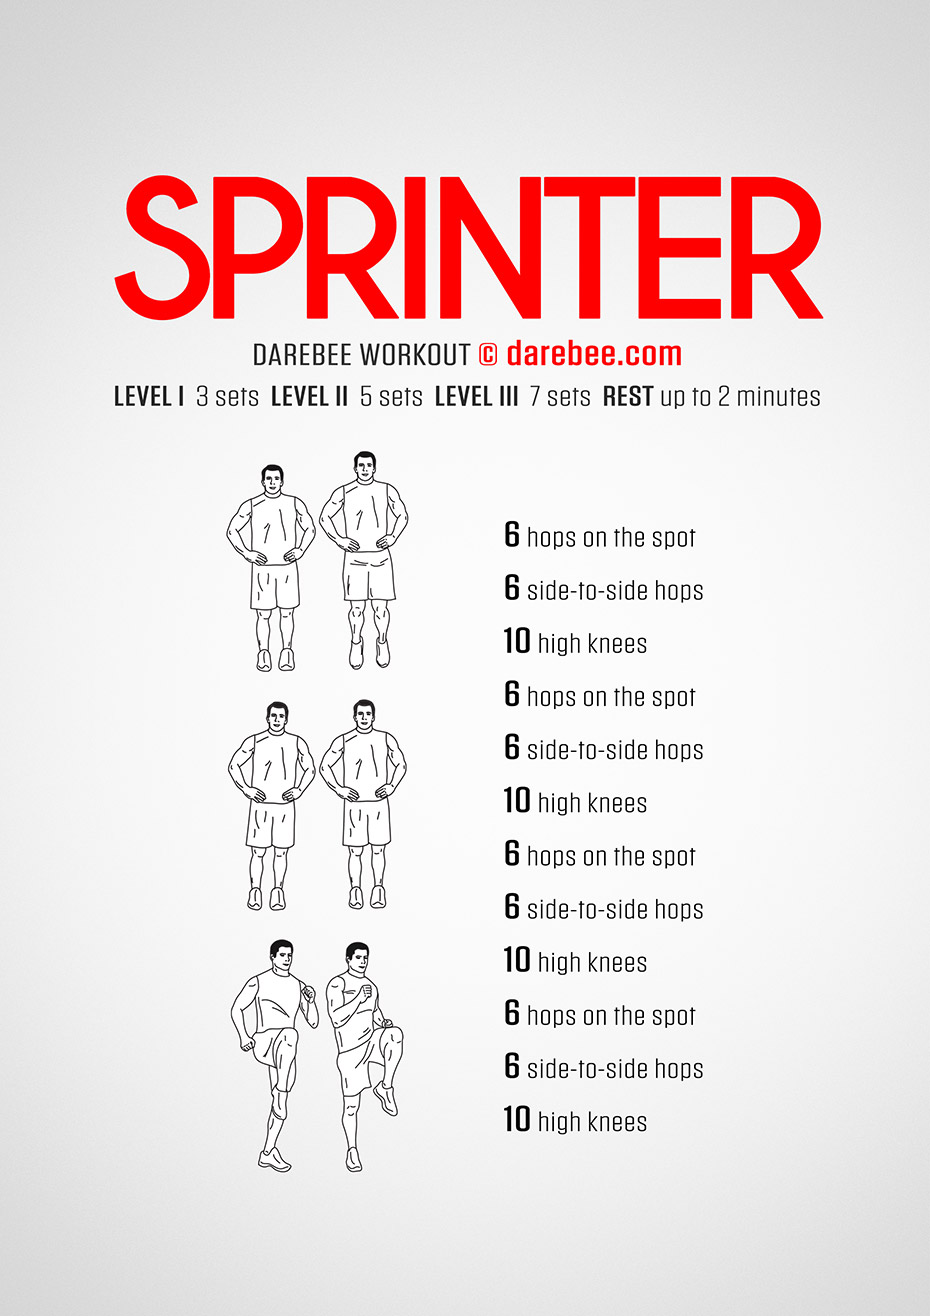 Sprinters Workout